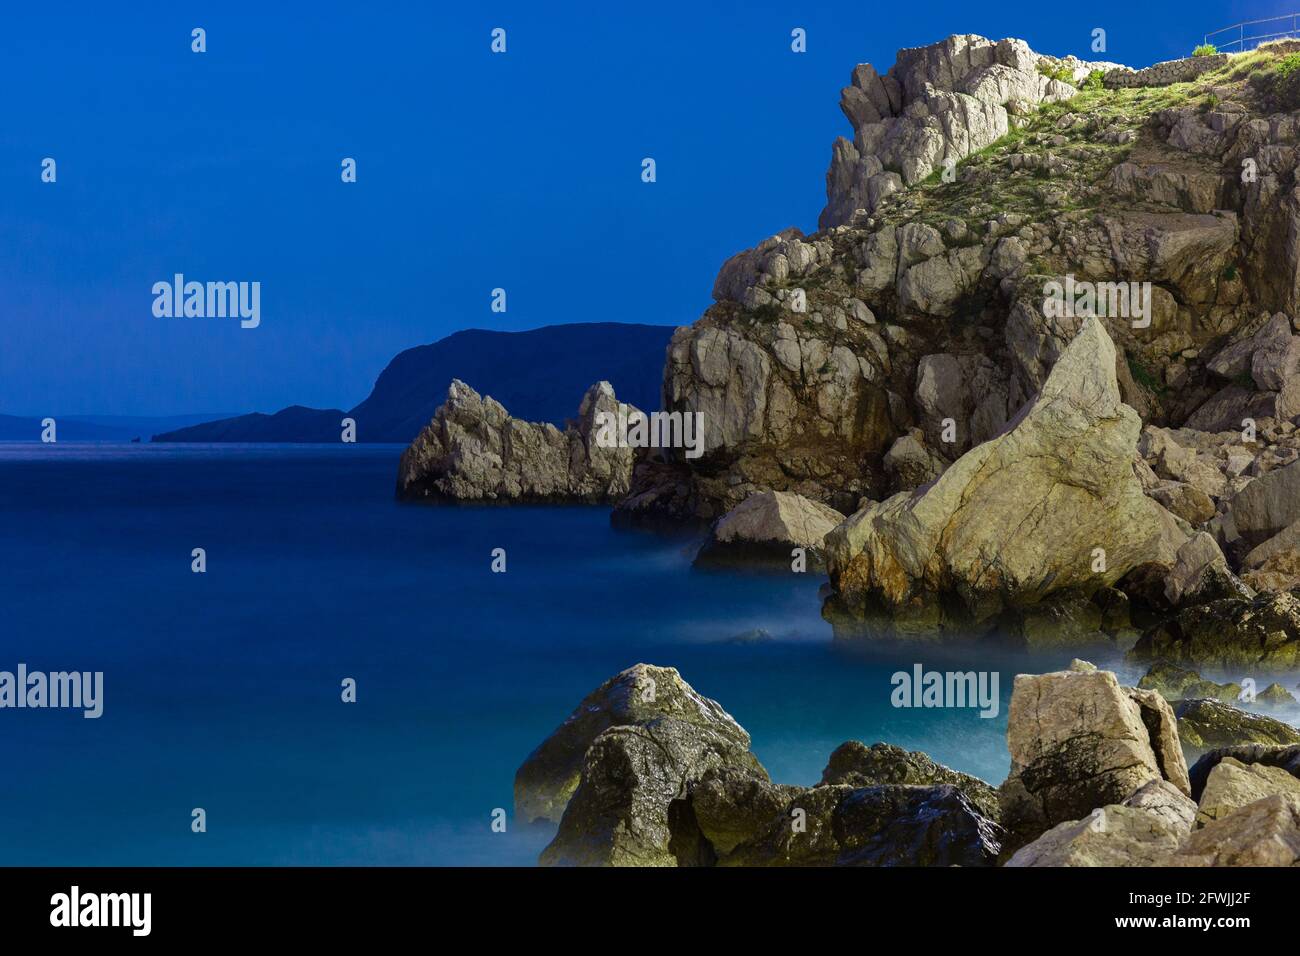 The Dalmatian Coast of the Adriatic Sea in Croatia at night Stock Photo